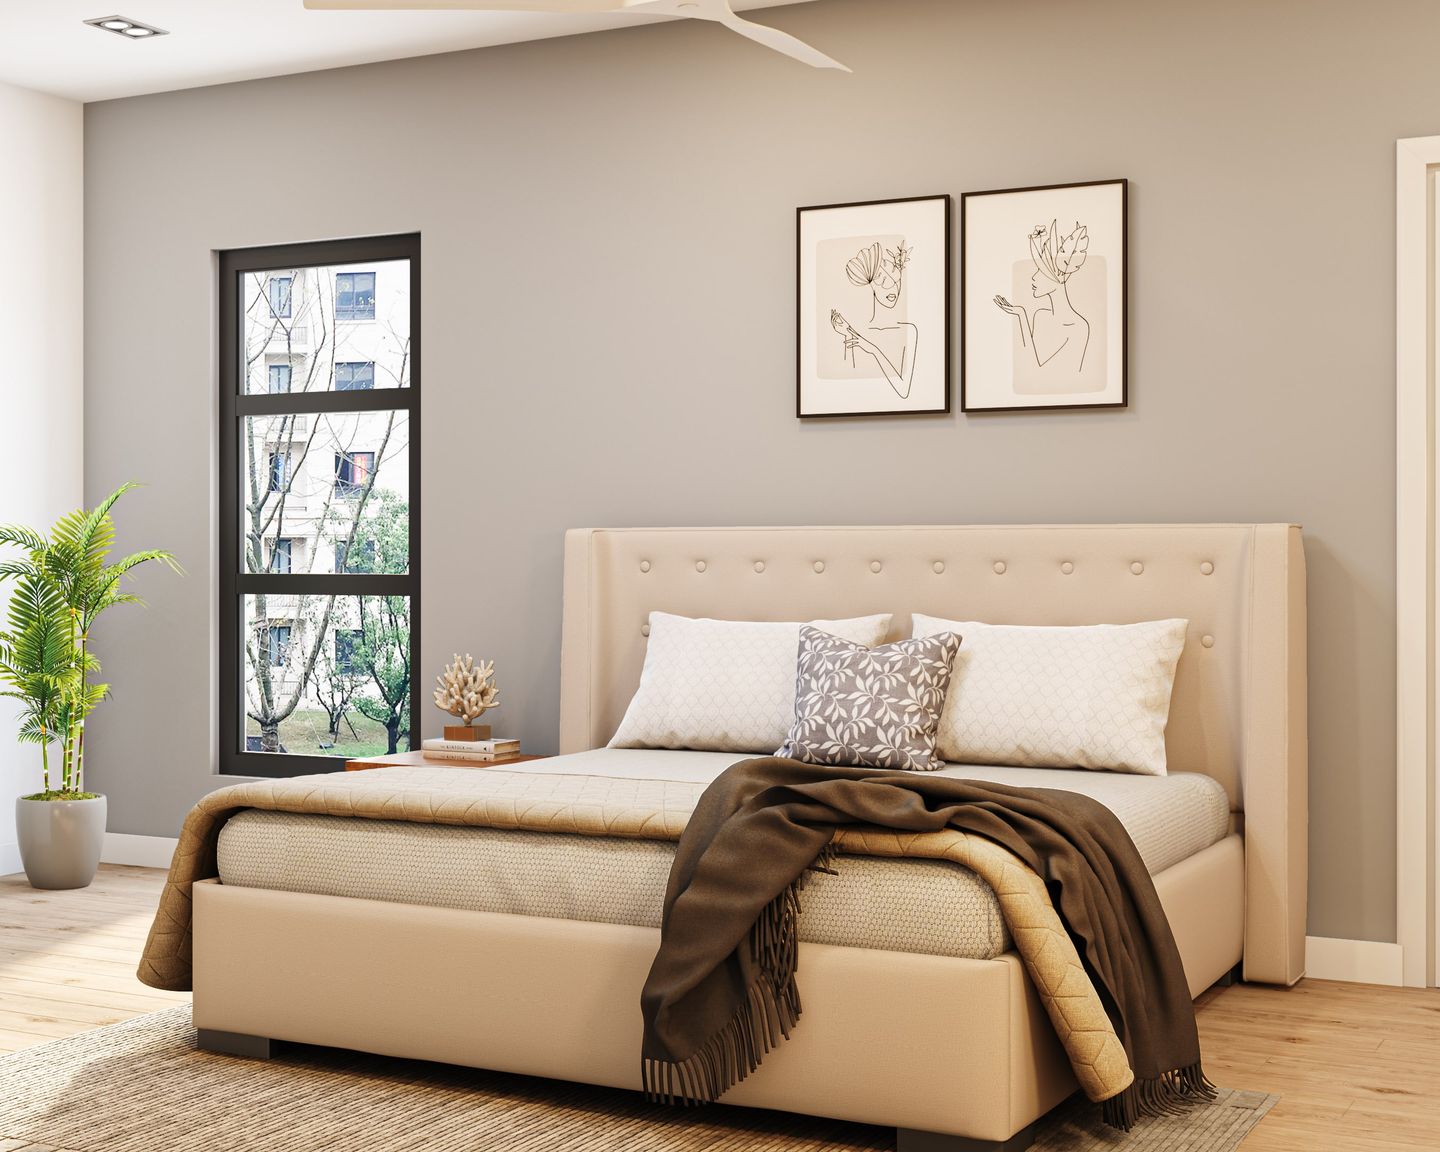 Contemporary Master Bedroom Design In Pastel Shades - Livspace